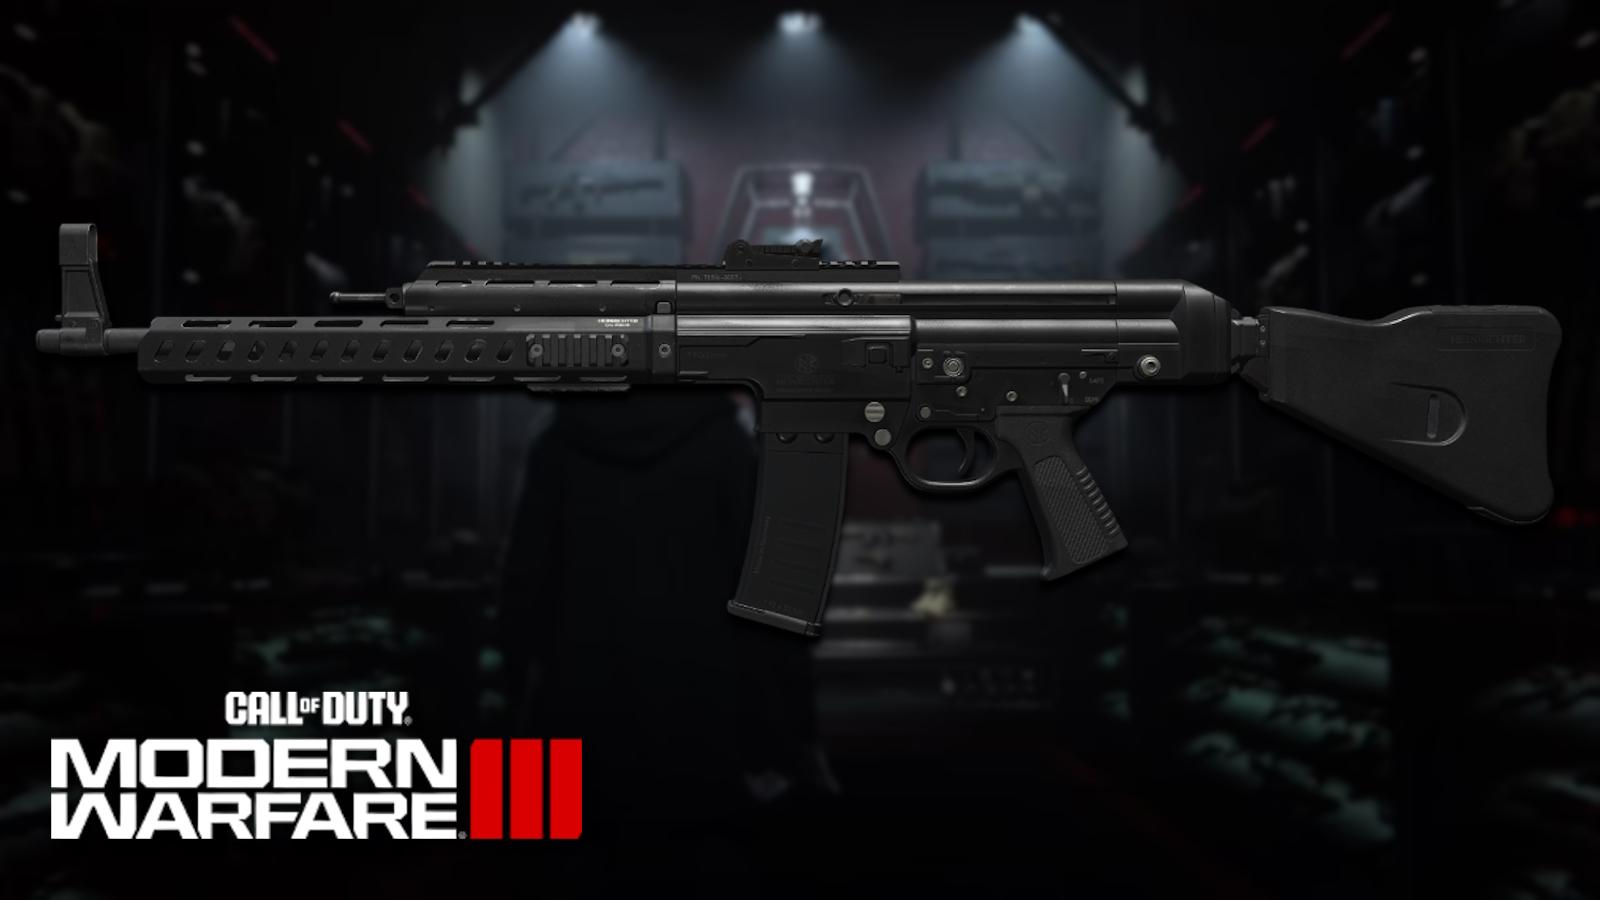 STG44 assault rifle in Modern Warfare 3.